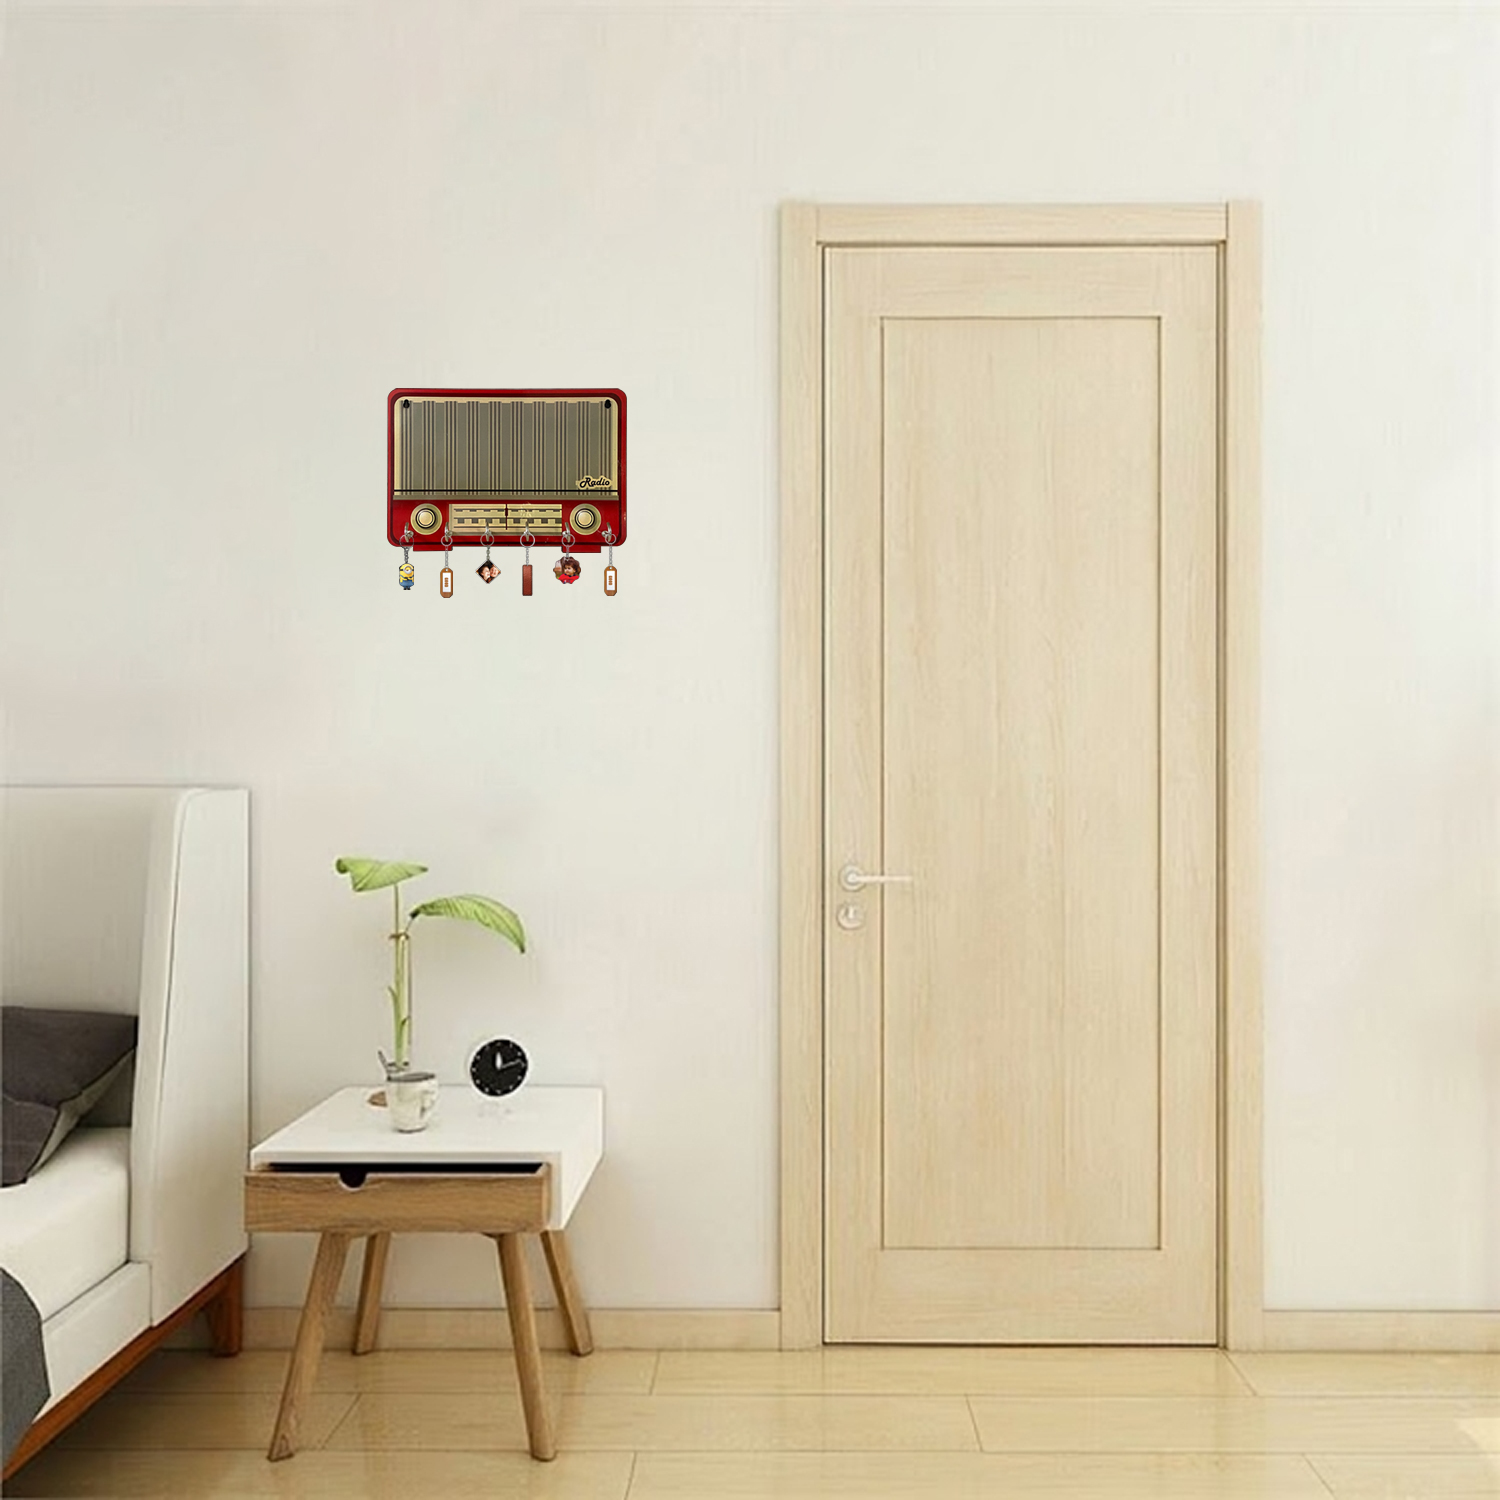 Stylish Radio Wooden Key Holder For Decor / Living Room